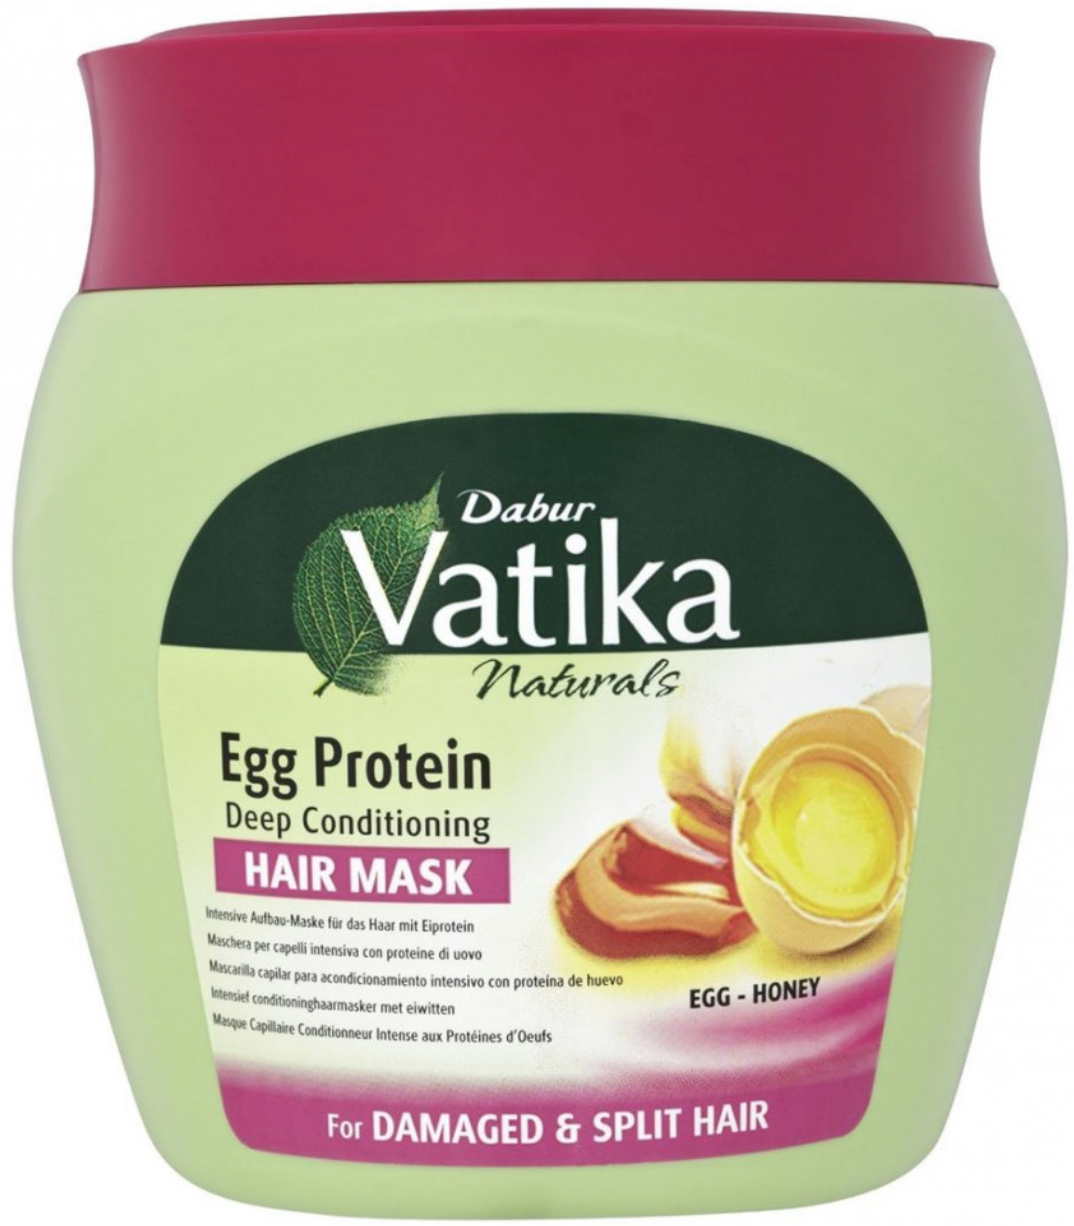 Vatika - Egg Protein Deep Conditioning Hair Mask (500g)